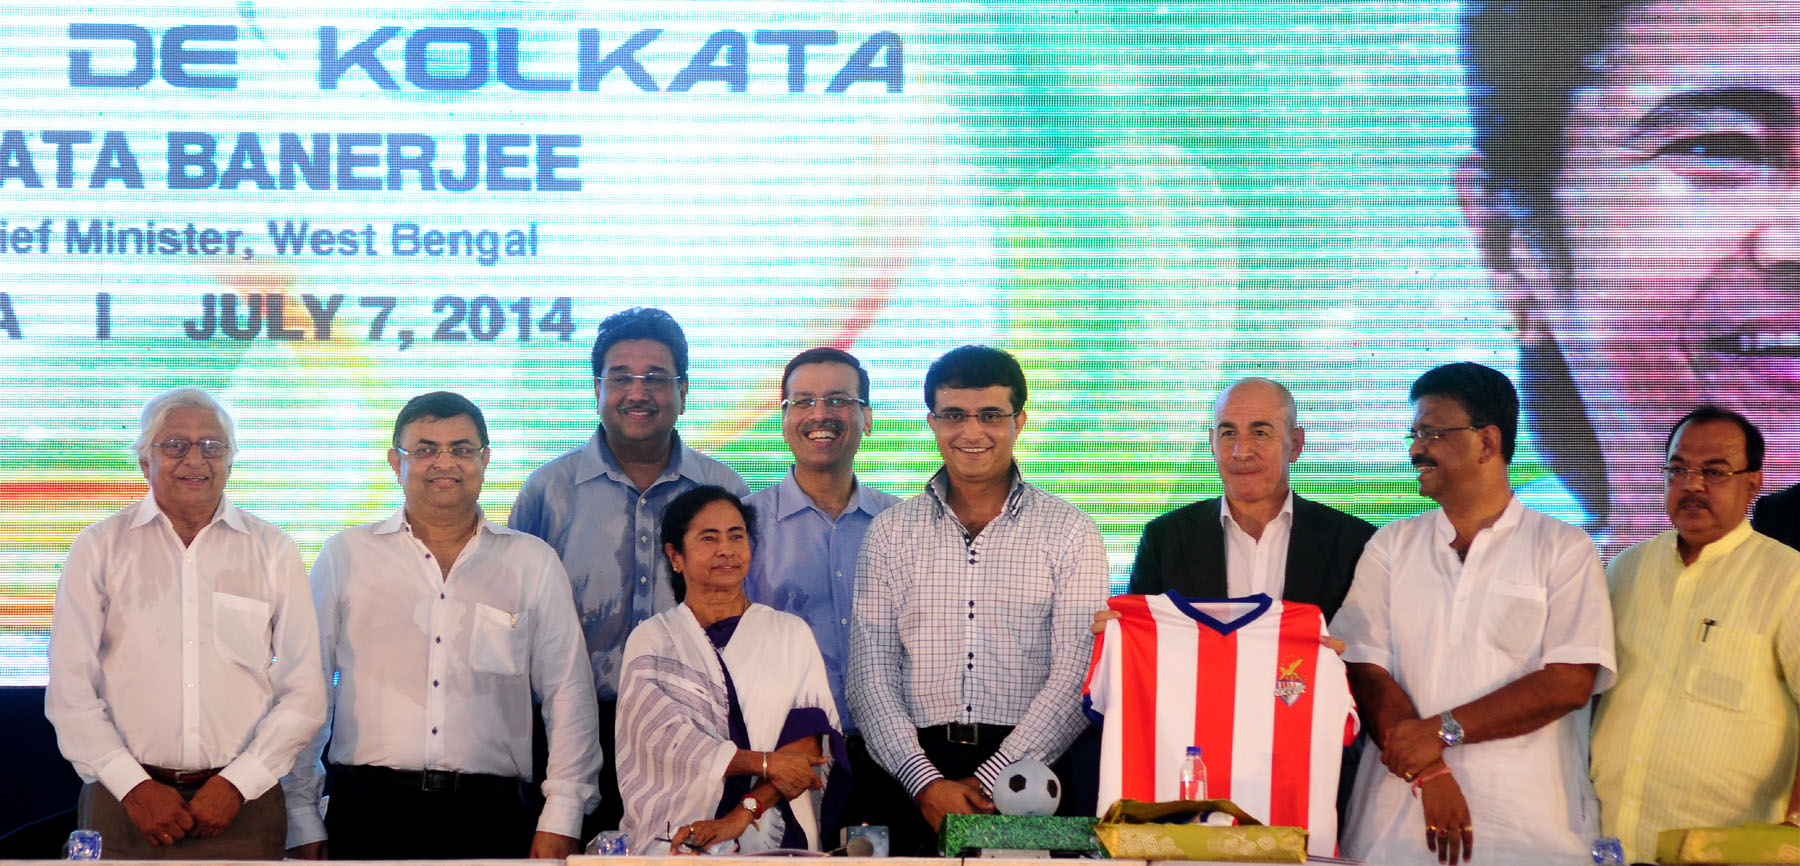  Mamata launches Atletico de Kolkata's jersey